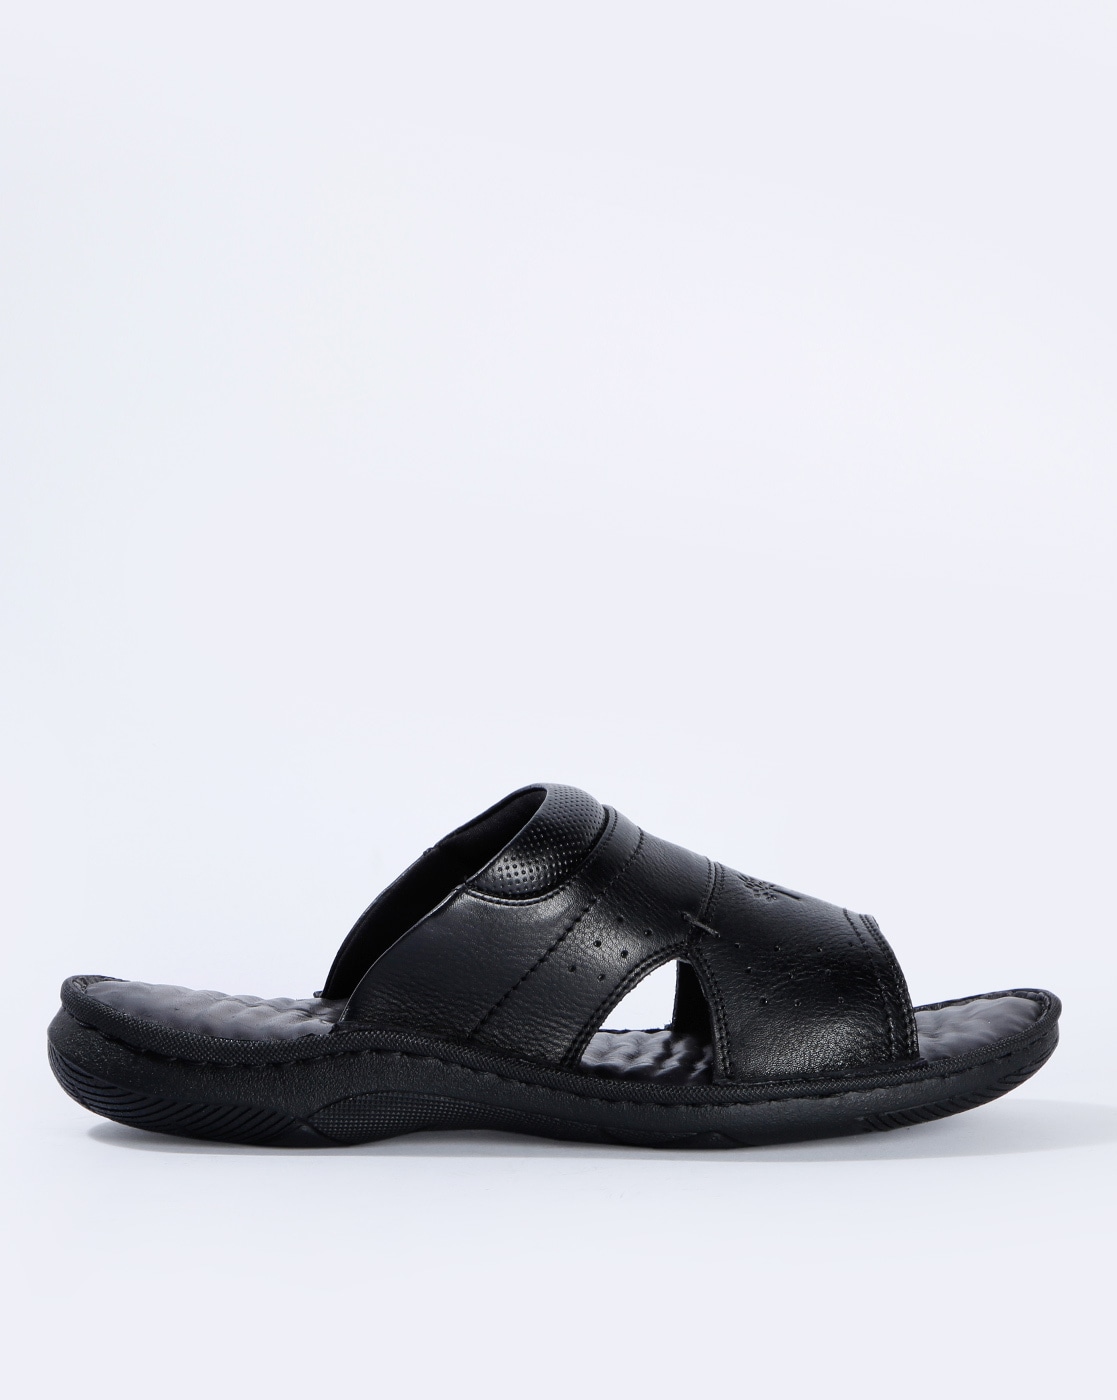 Women Black Casual Sandals Flats - Buy Women Black Casual Sandals Flats  online in India